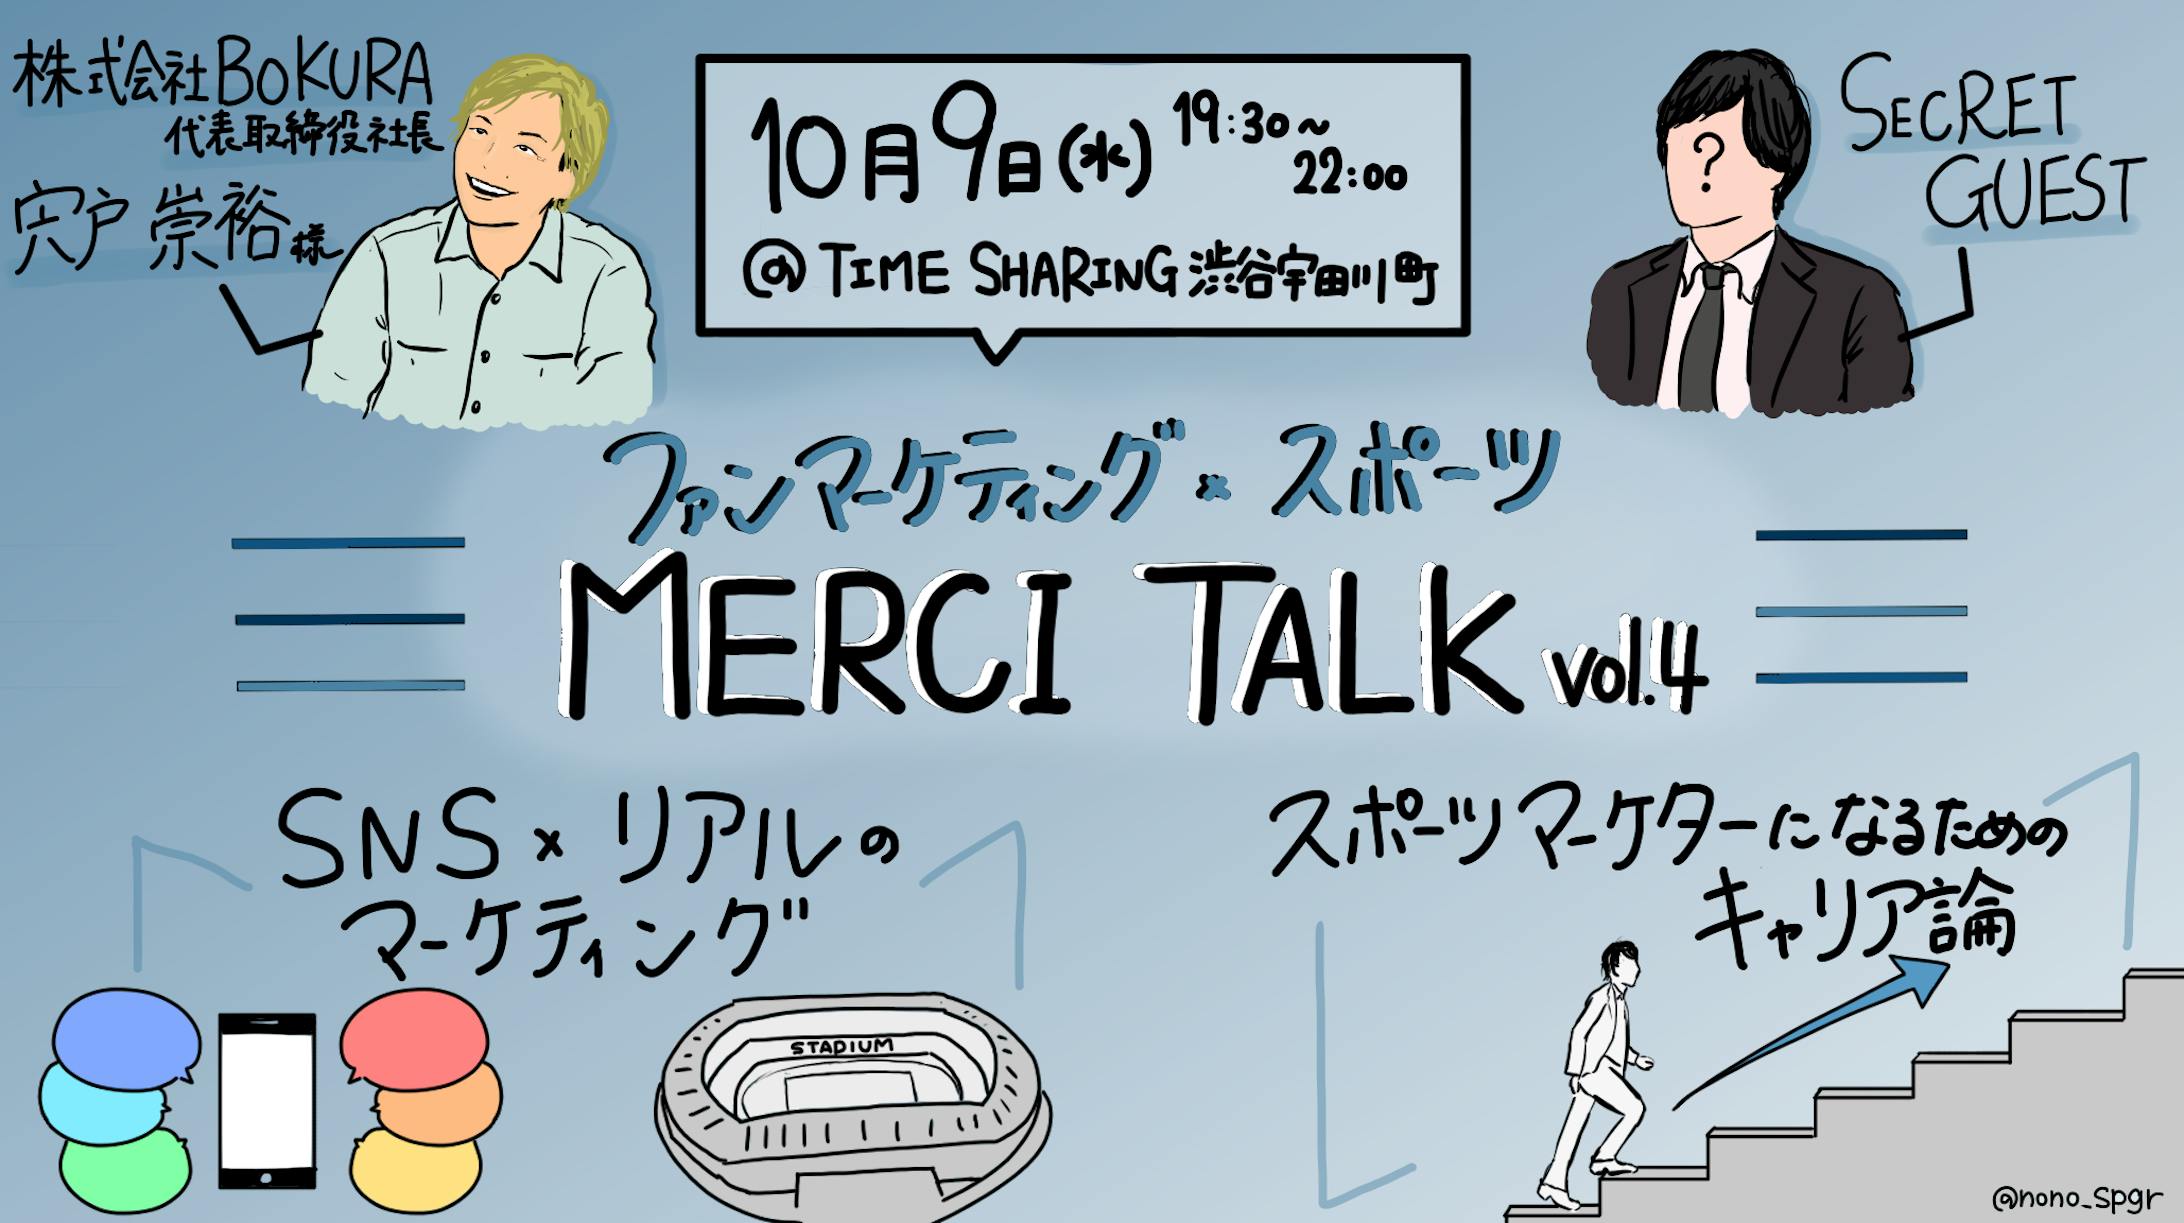 MERCI TALKイベント『ファンマーケティング×スポーツ』宍戸 崇裕氏/SECRET GUEST-1